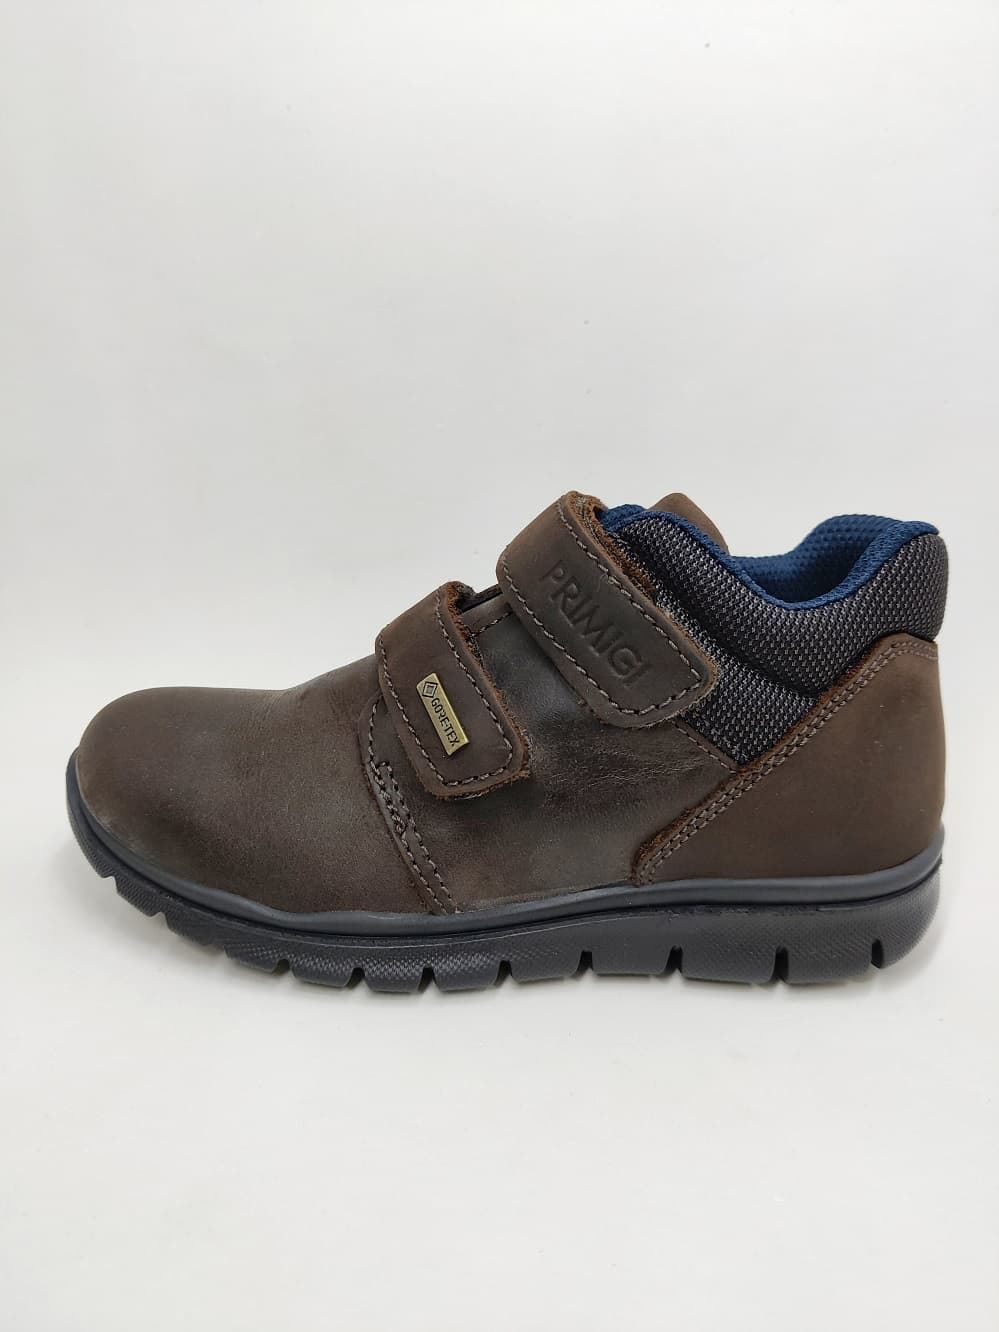 Primigi Gore-tex boots for children Brown leather - Image 1